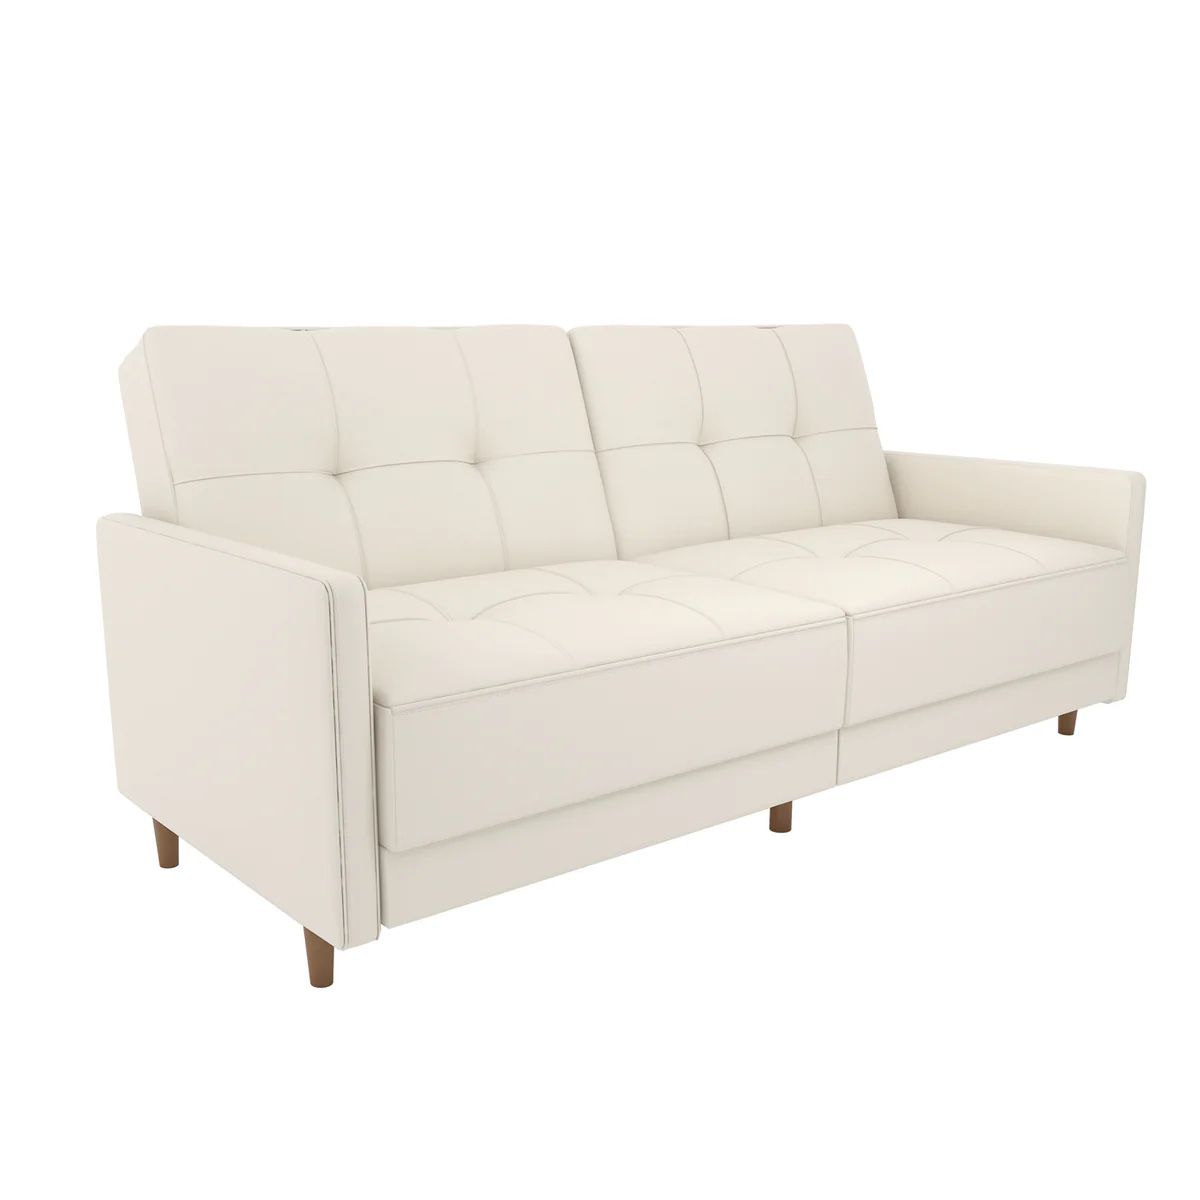 White Leather Sofa Sleeper